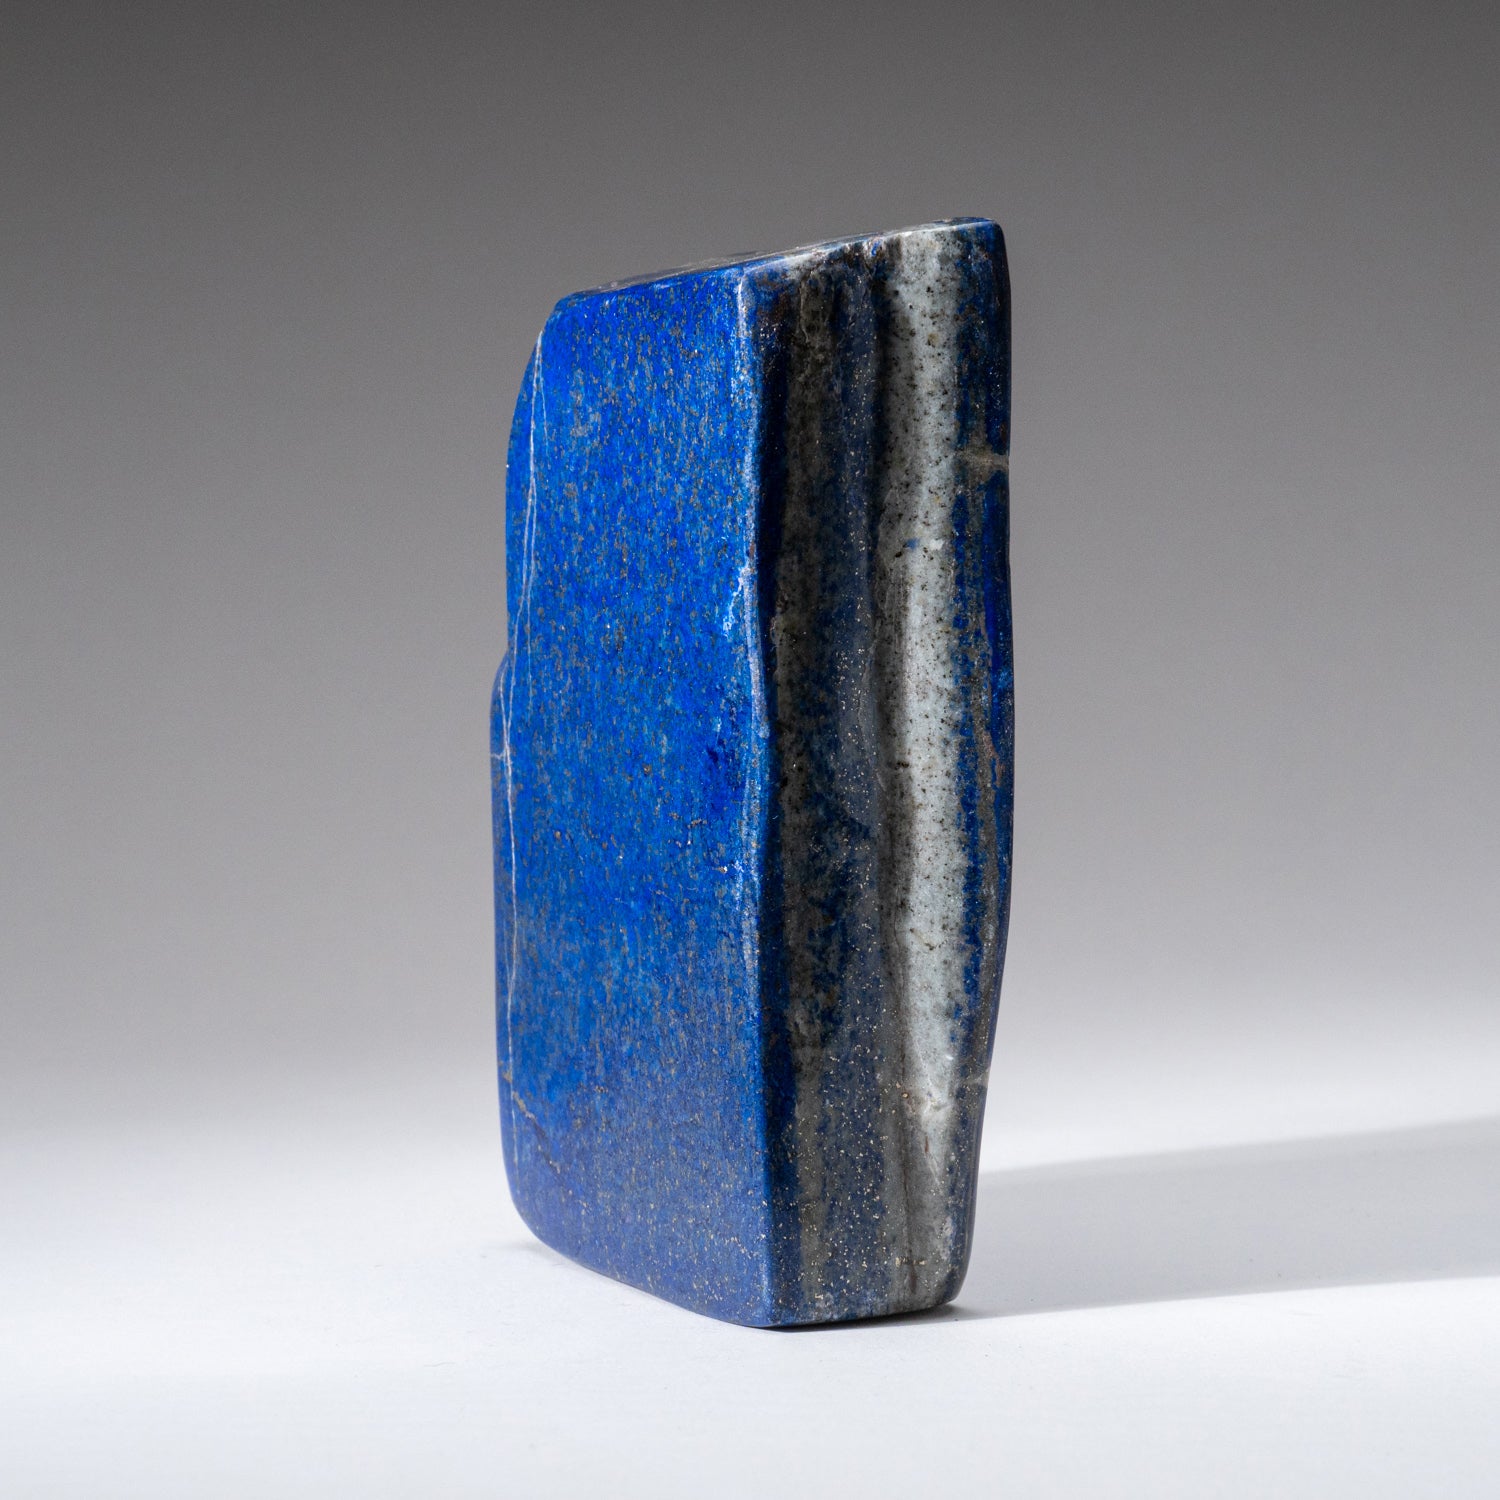 Polished Lapis Lazuli Freeform from Afghanistan (2.7 lbs)